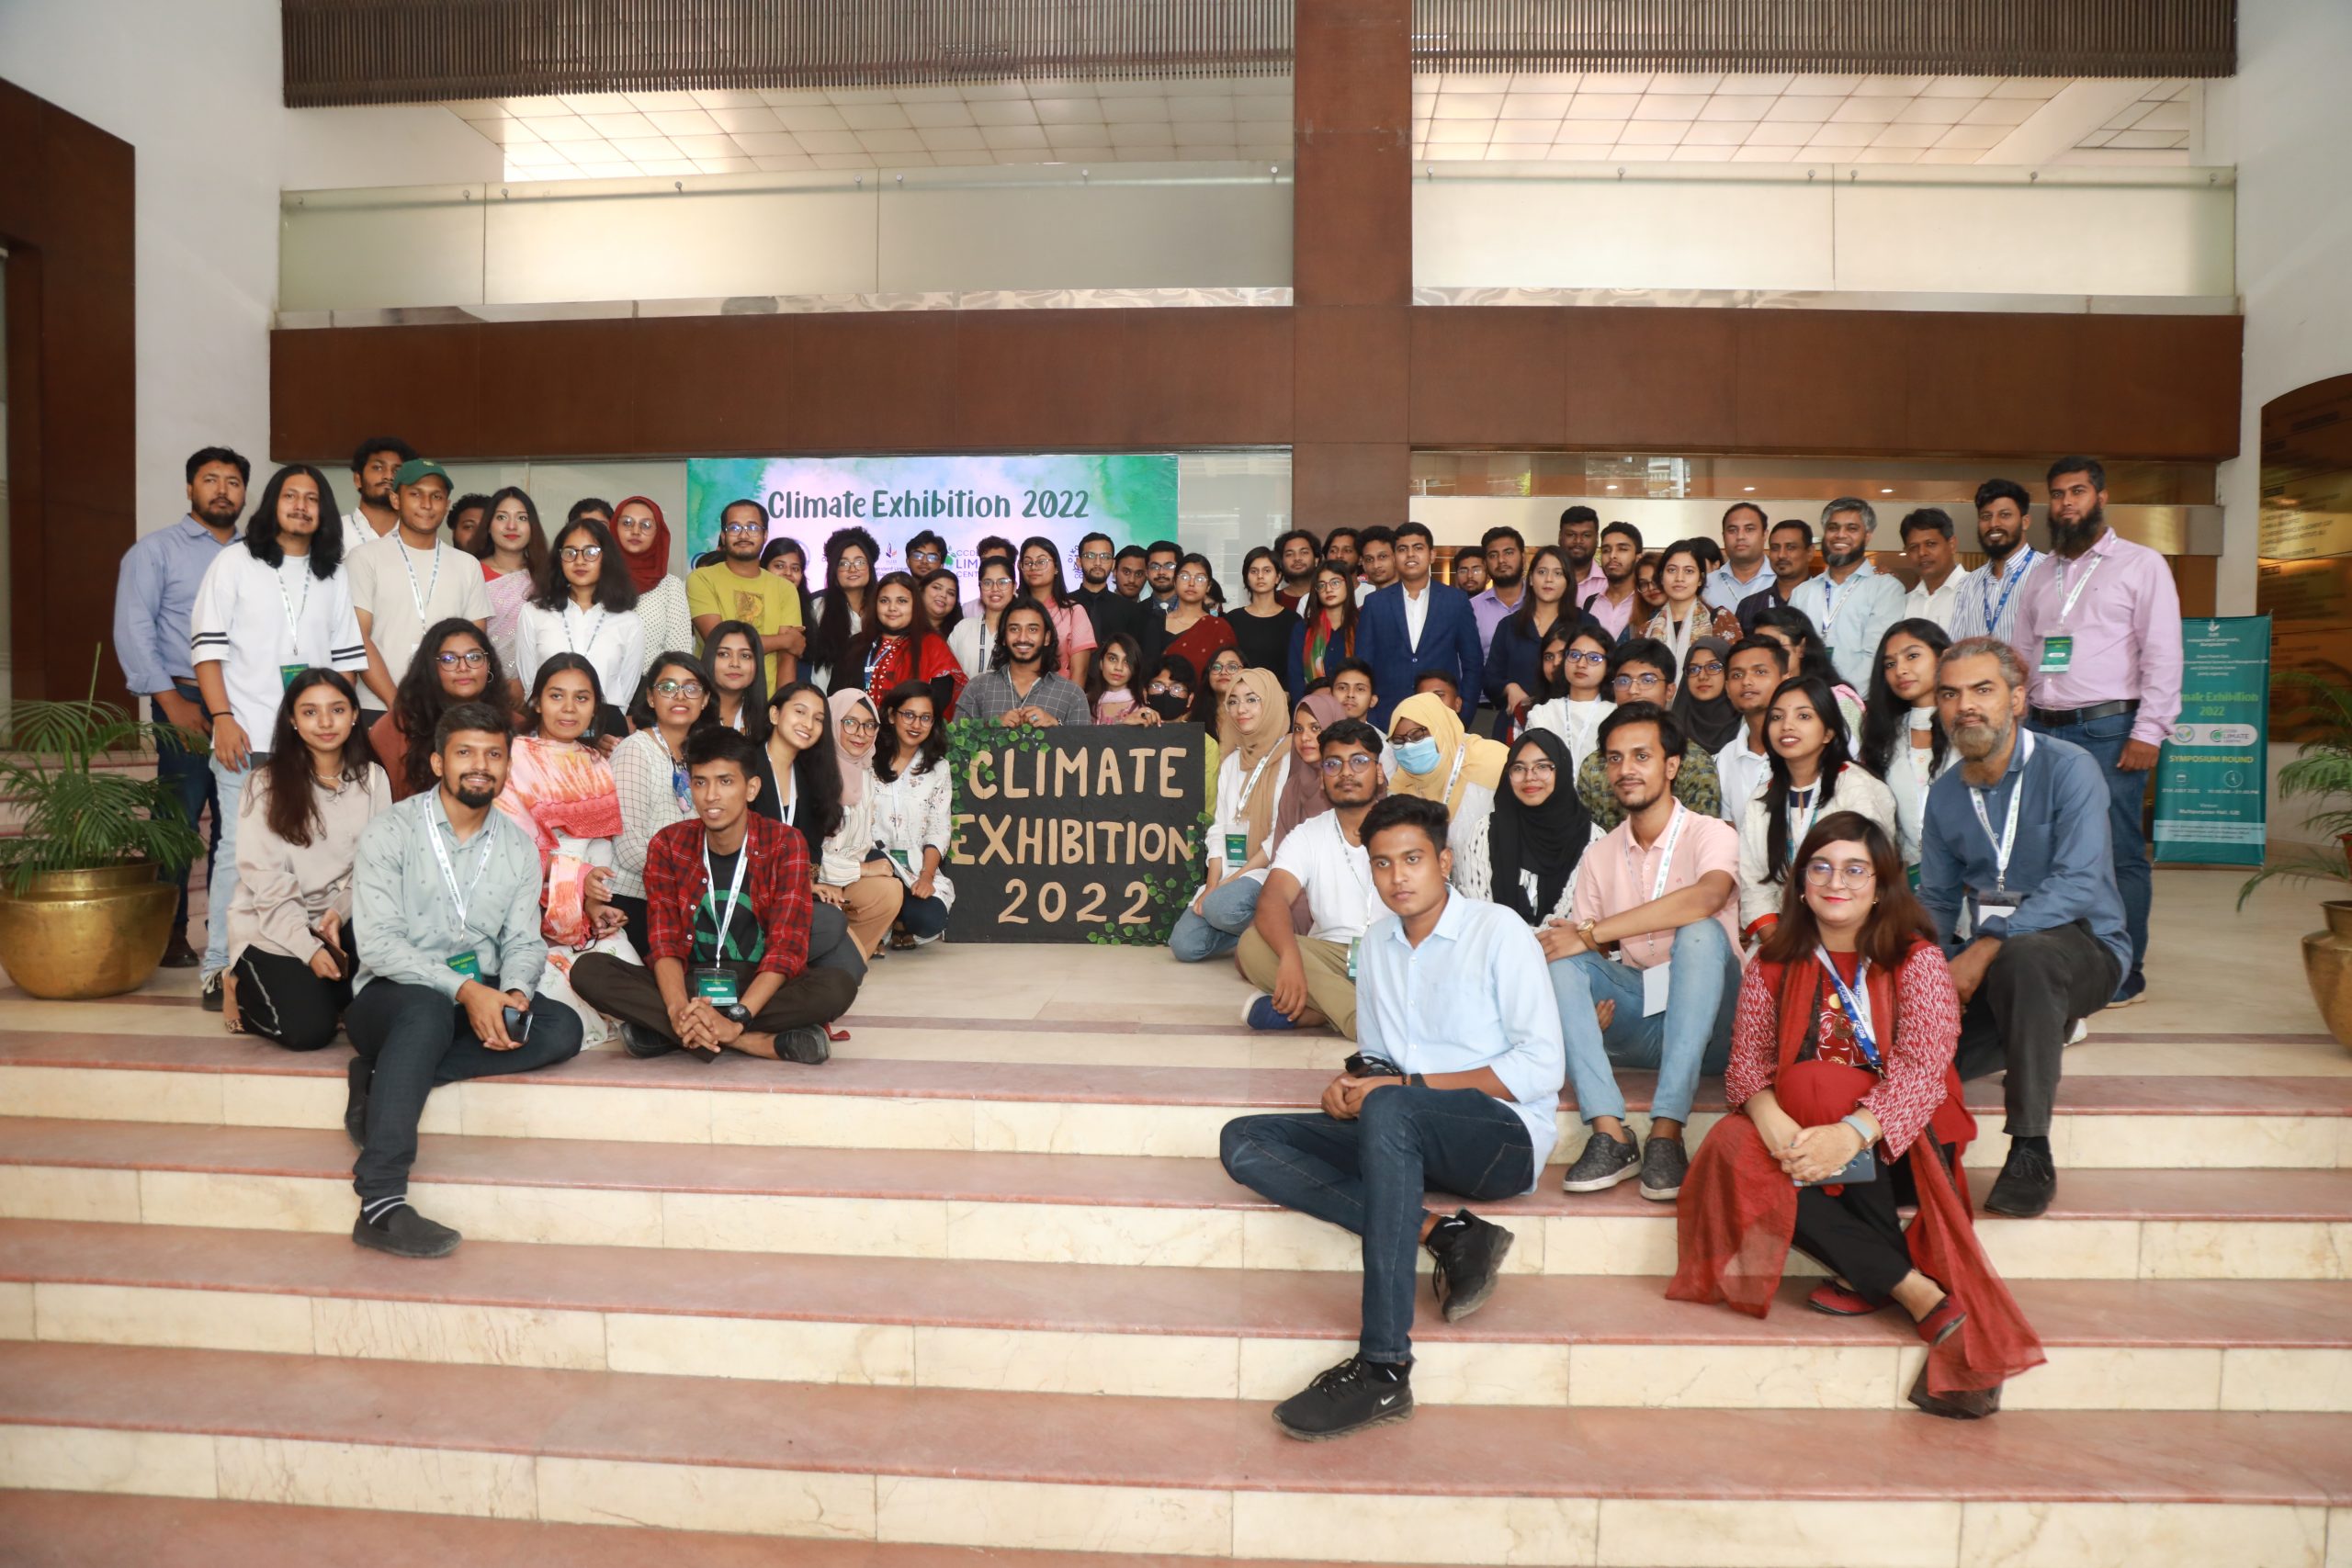 Climate Exhibition 2022 held at IUB